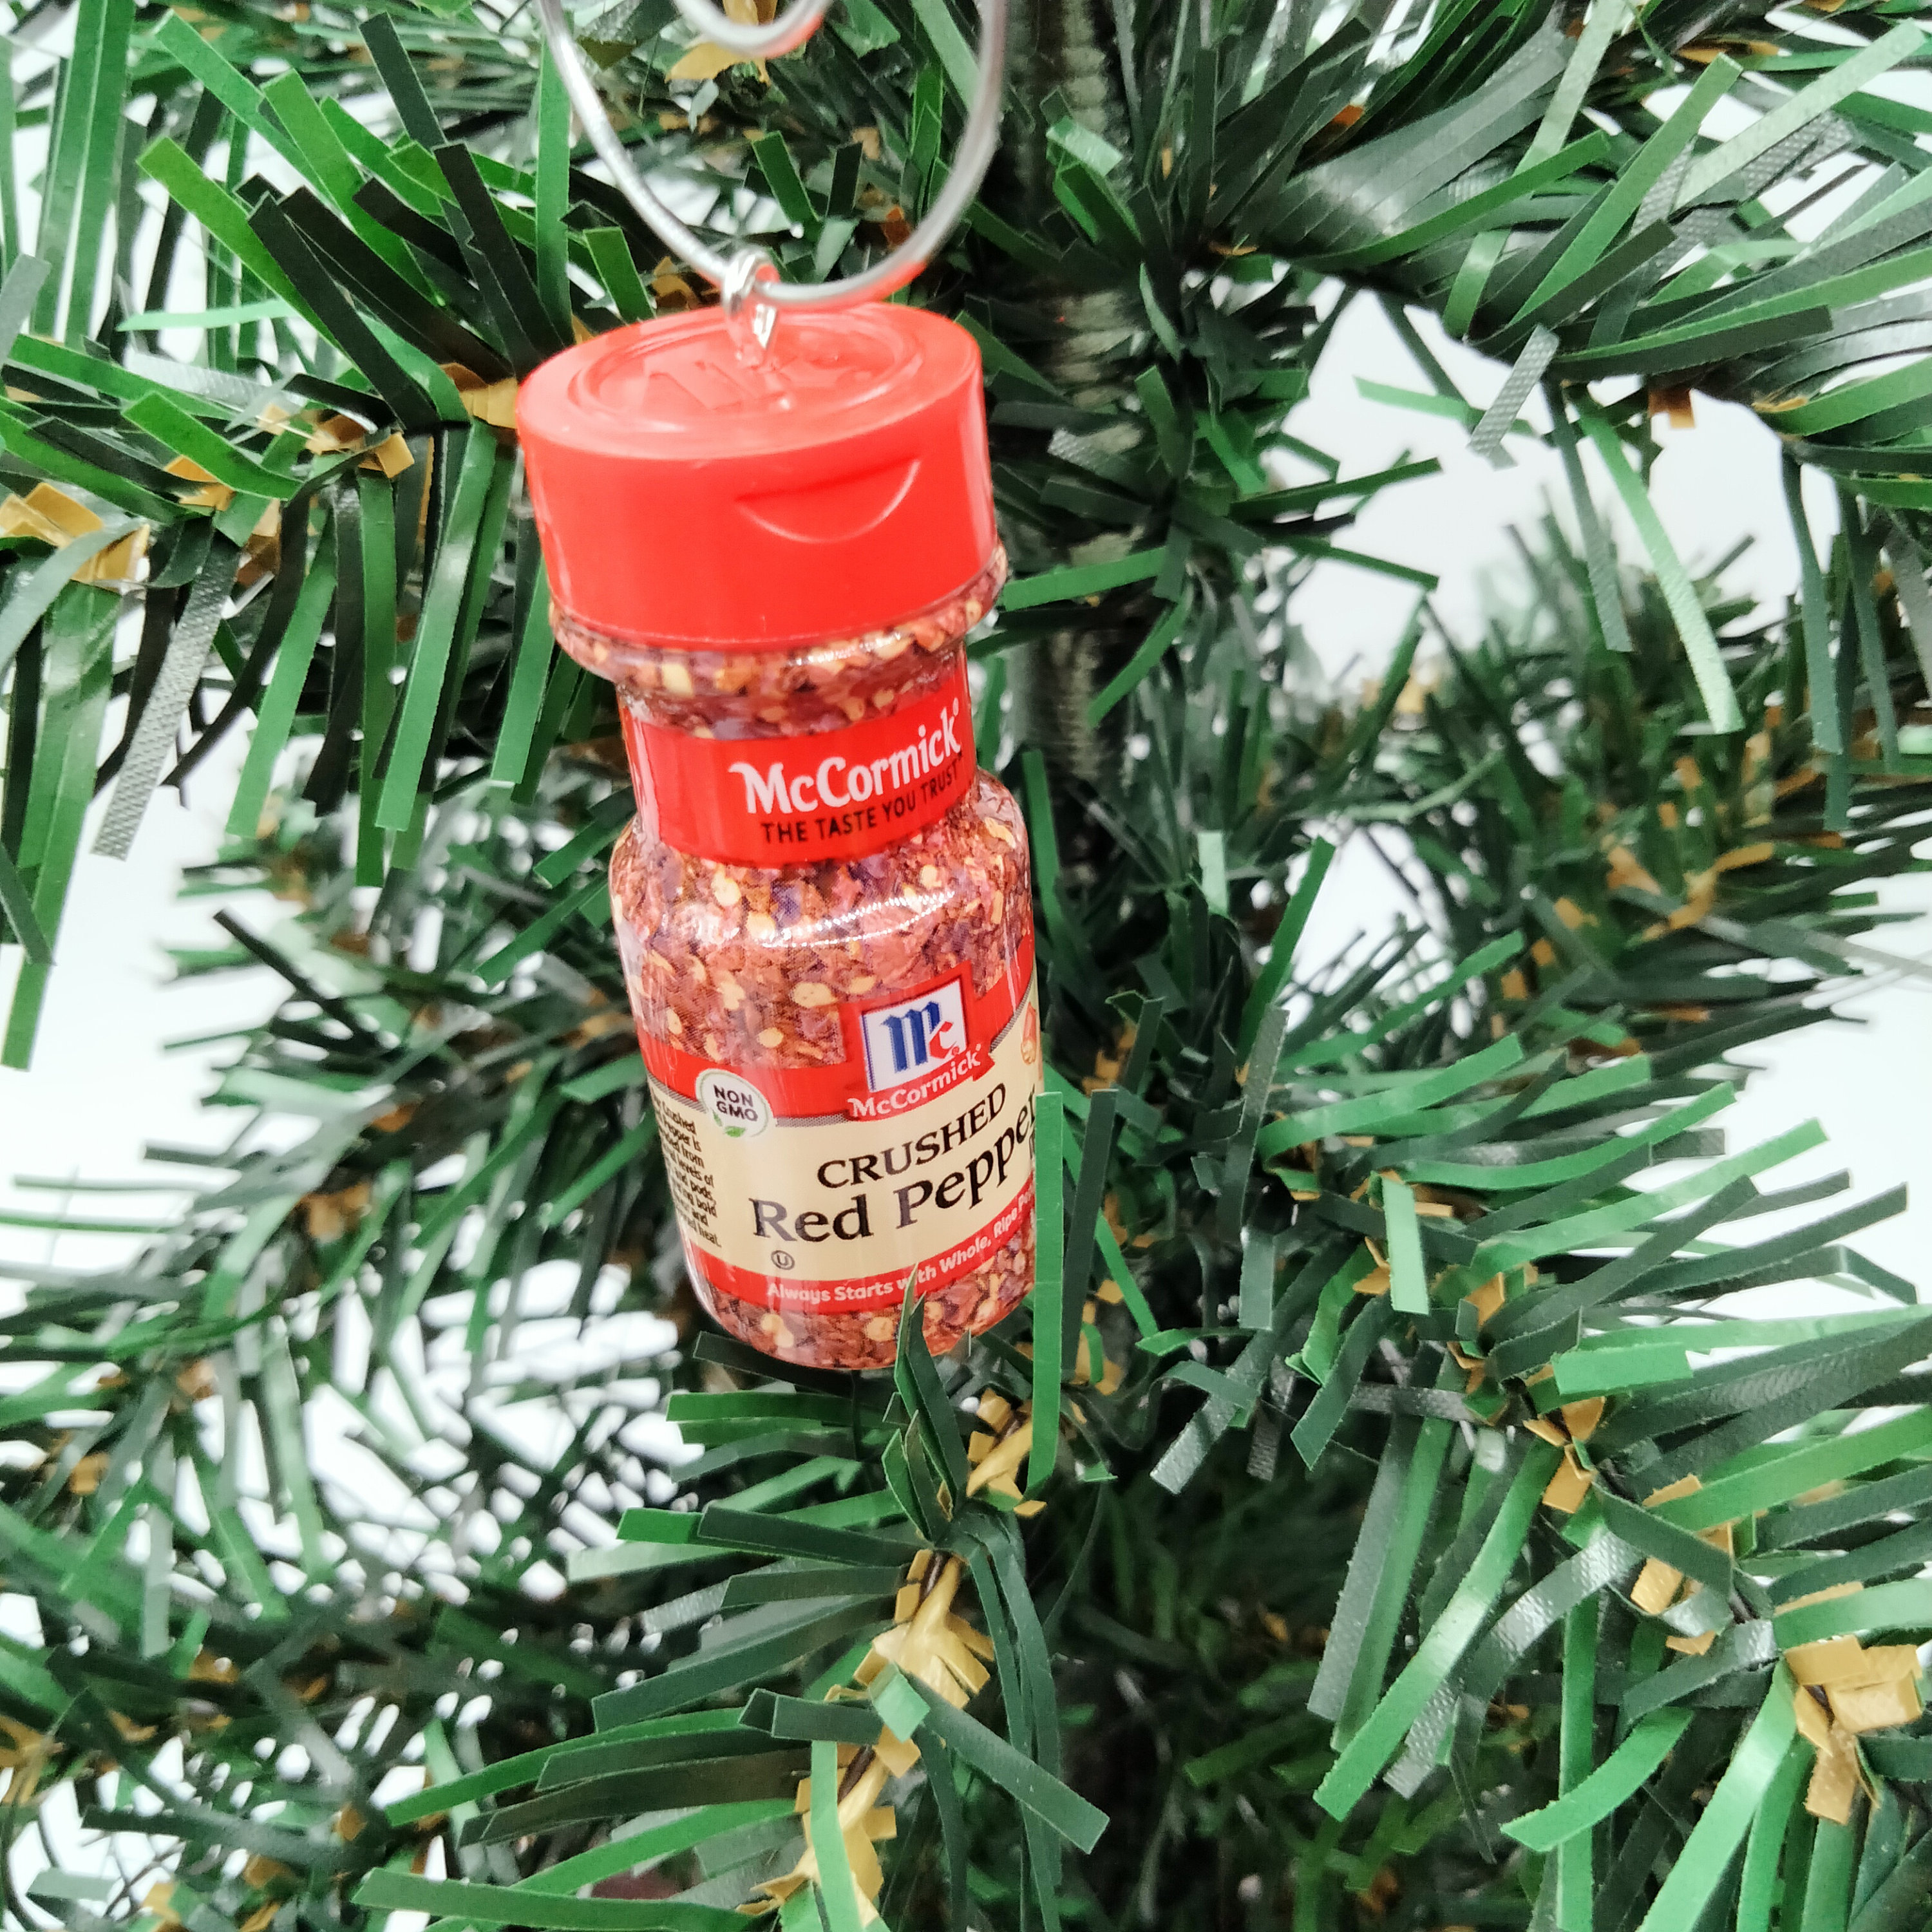 Zatarain's Red Beans and Rice Hanging Ornament Christmas Ornament Mini  Ornament 